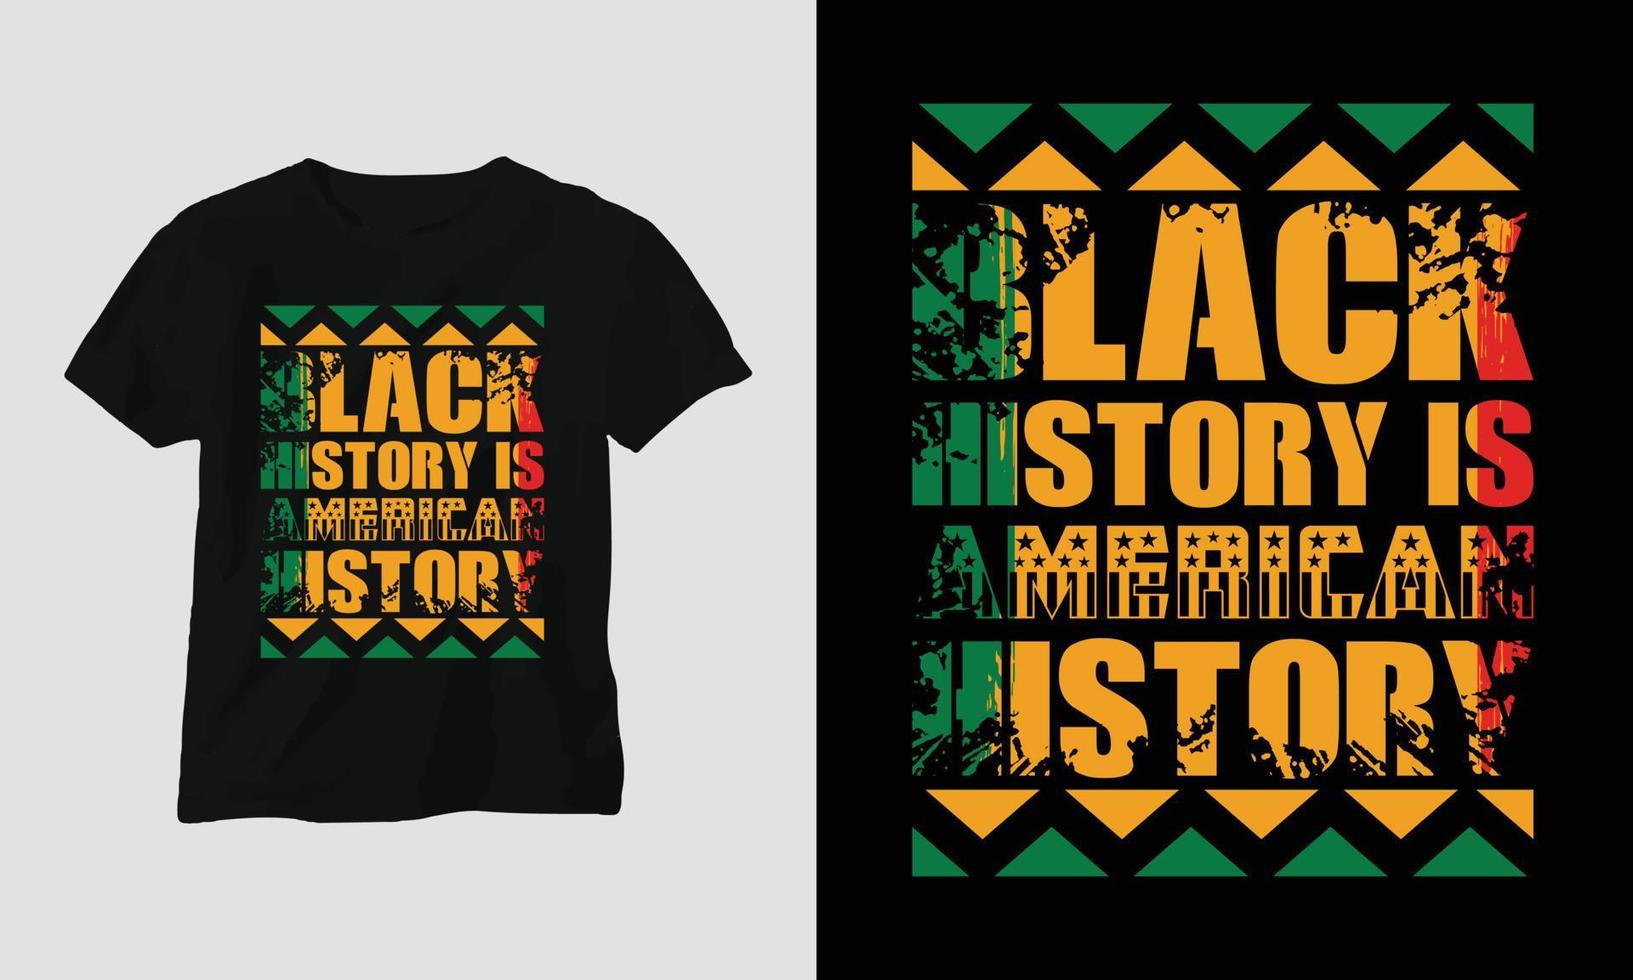 schwarze Geschichte ist amerikanische Geschichte - schwarzes Geschichtsmonatst-shirt vektor